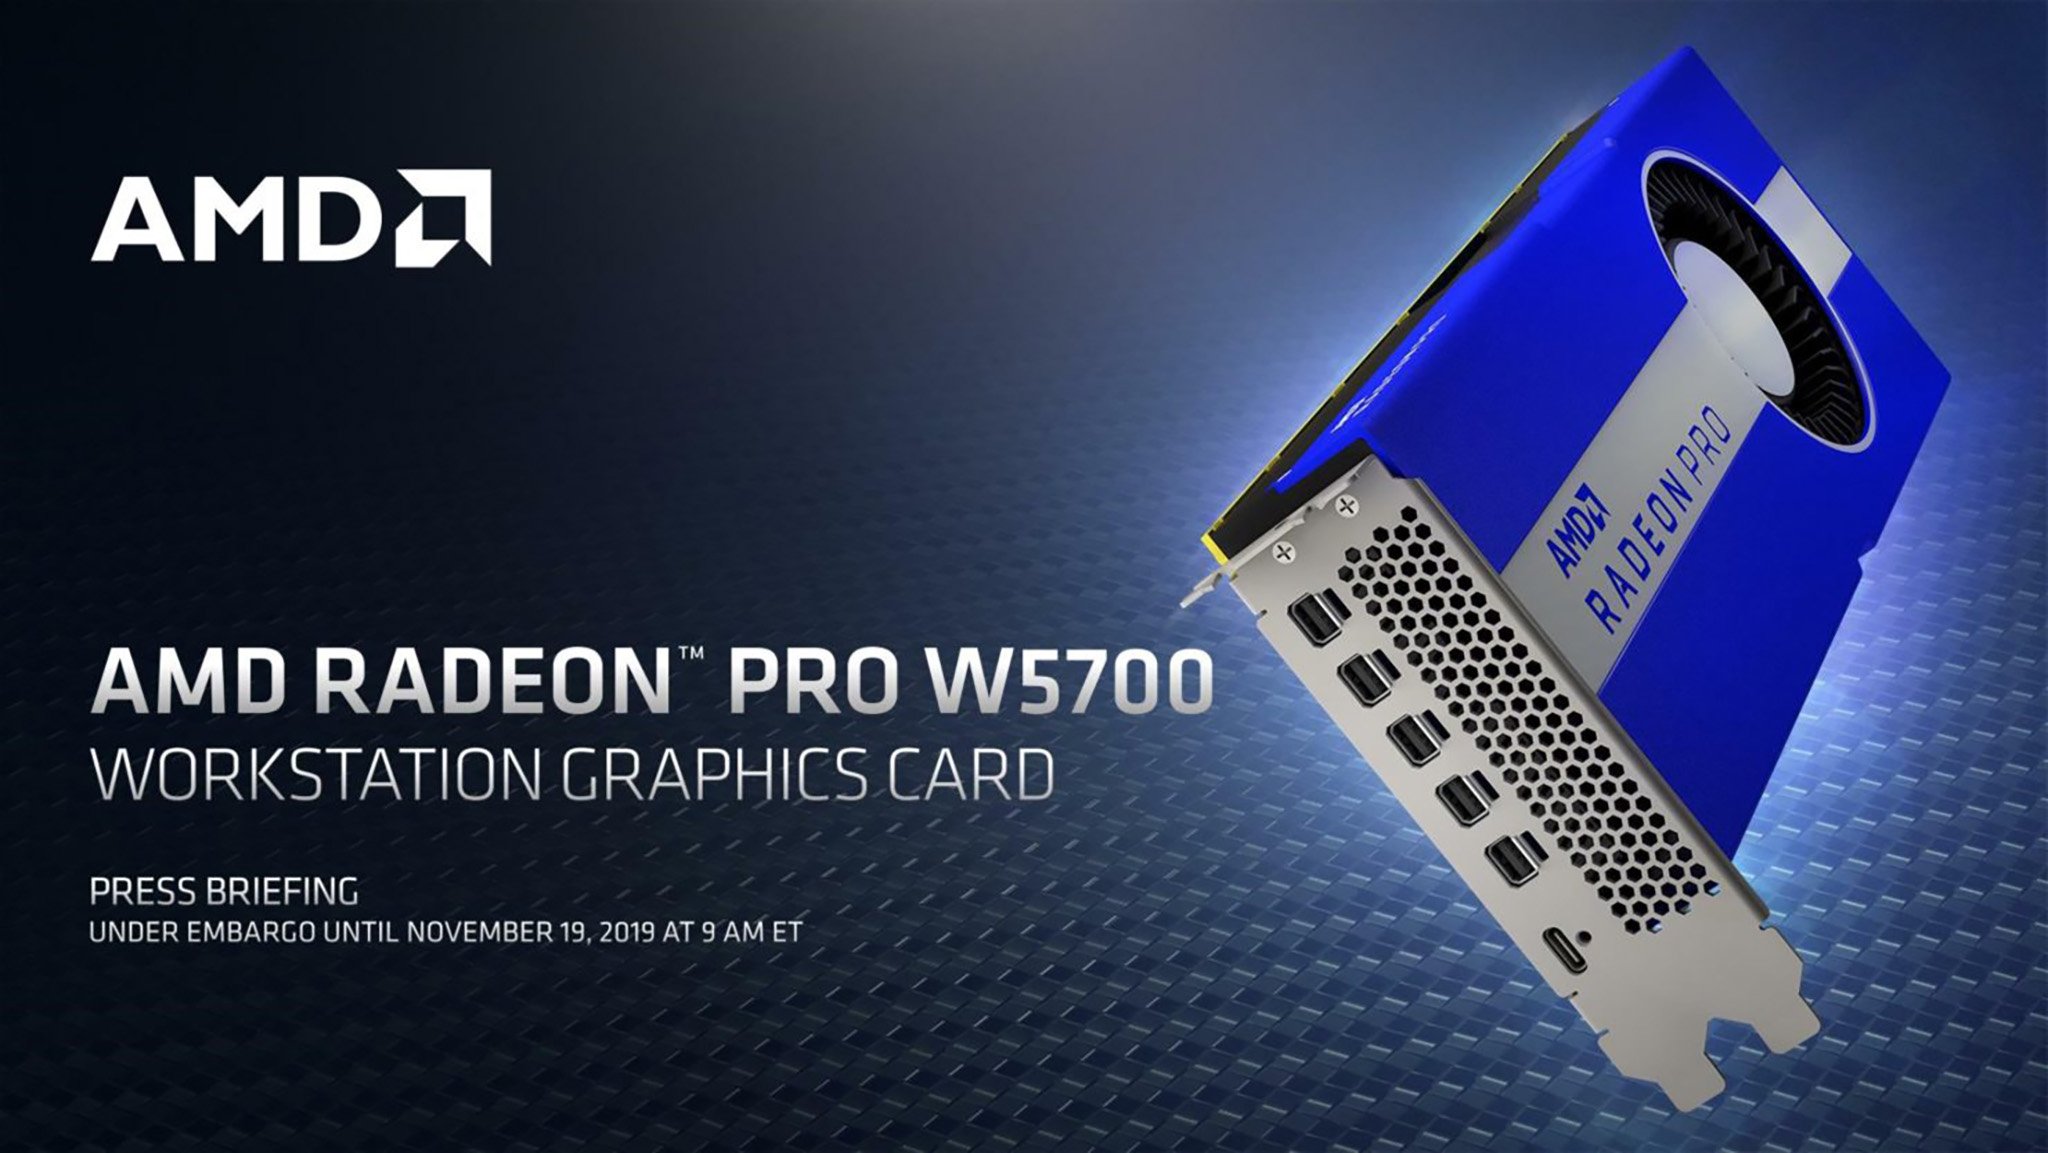 VGA RADEON PRO W5700/ 8GB of GDDR5 VRAM/AMD 7nm RDNA Architecture/ 256-Bit Memory Interface